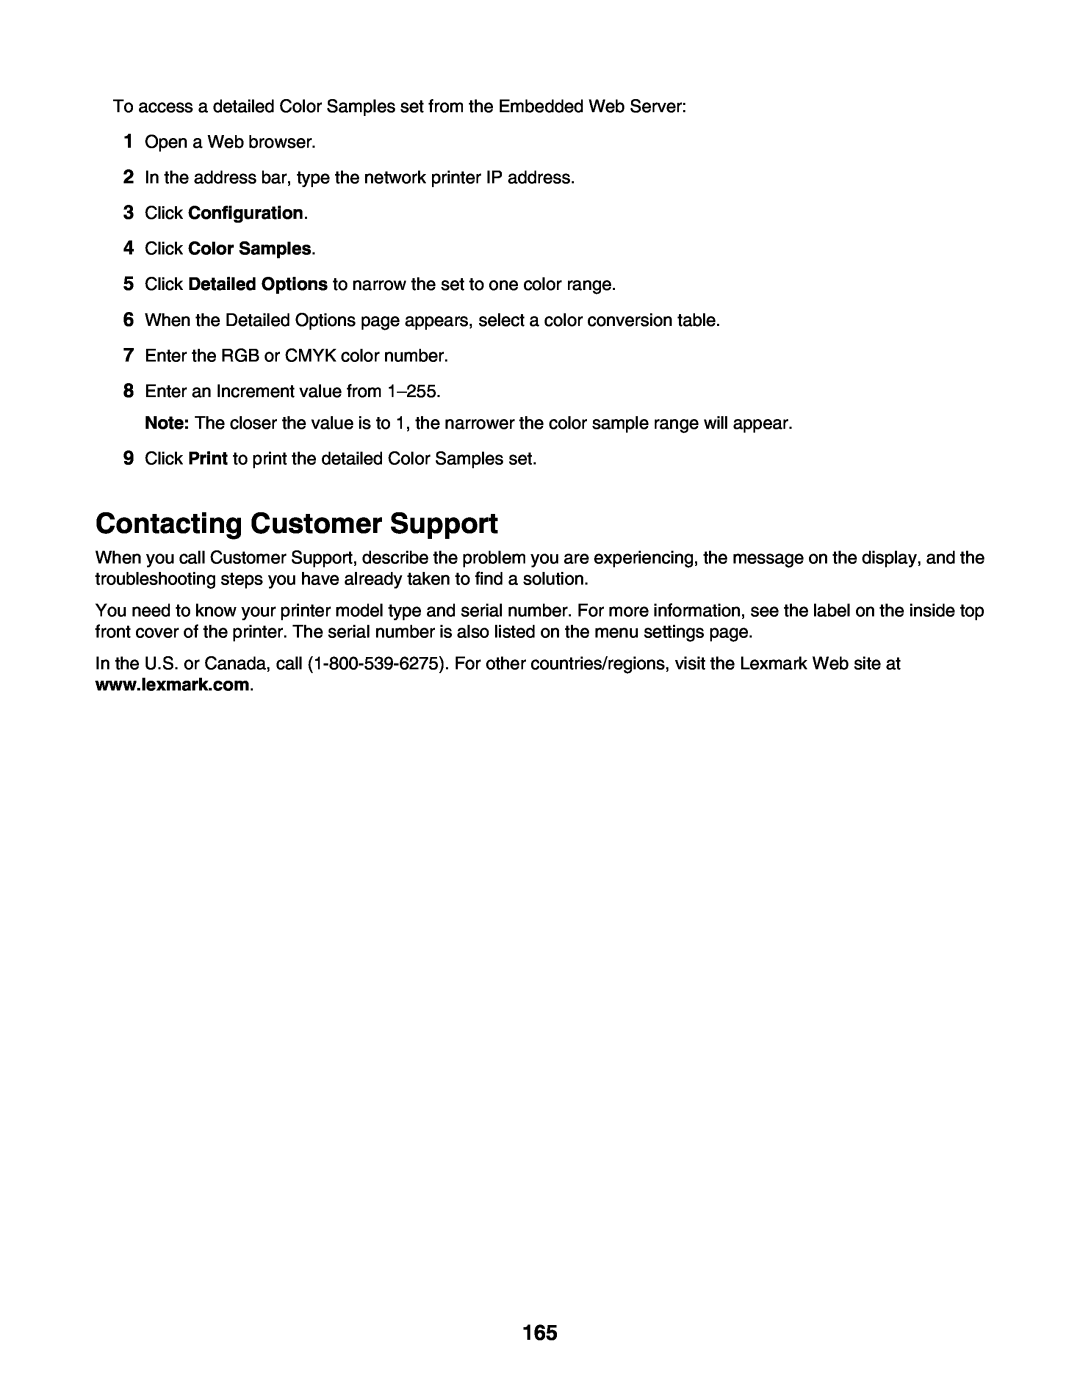 Lexmark C935 manual Contacting Customer Support, Click Configuration 4 Click Color Samples 